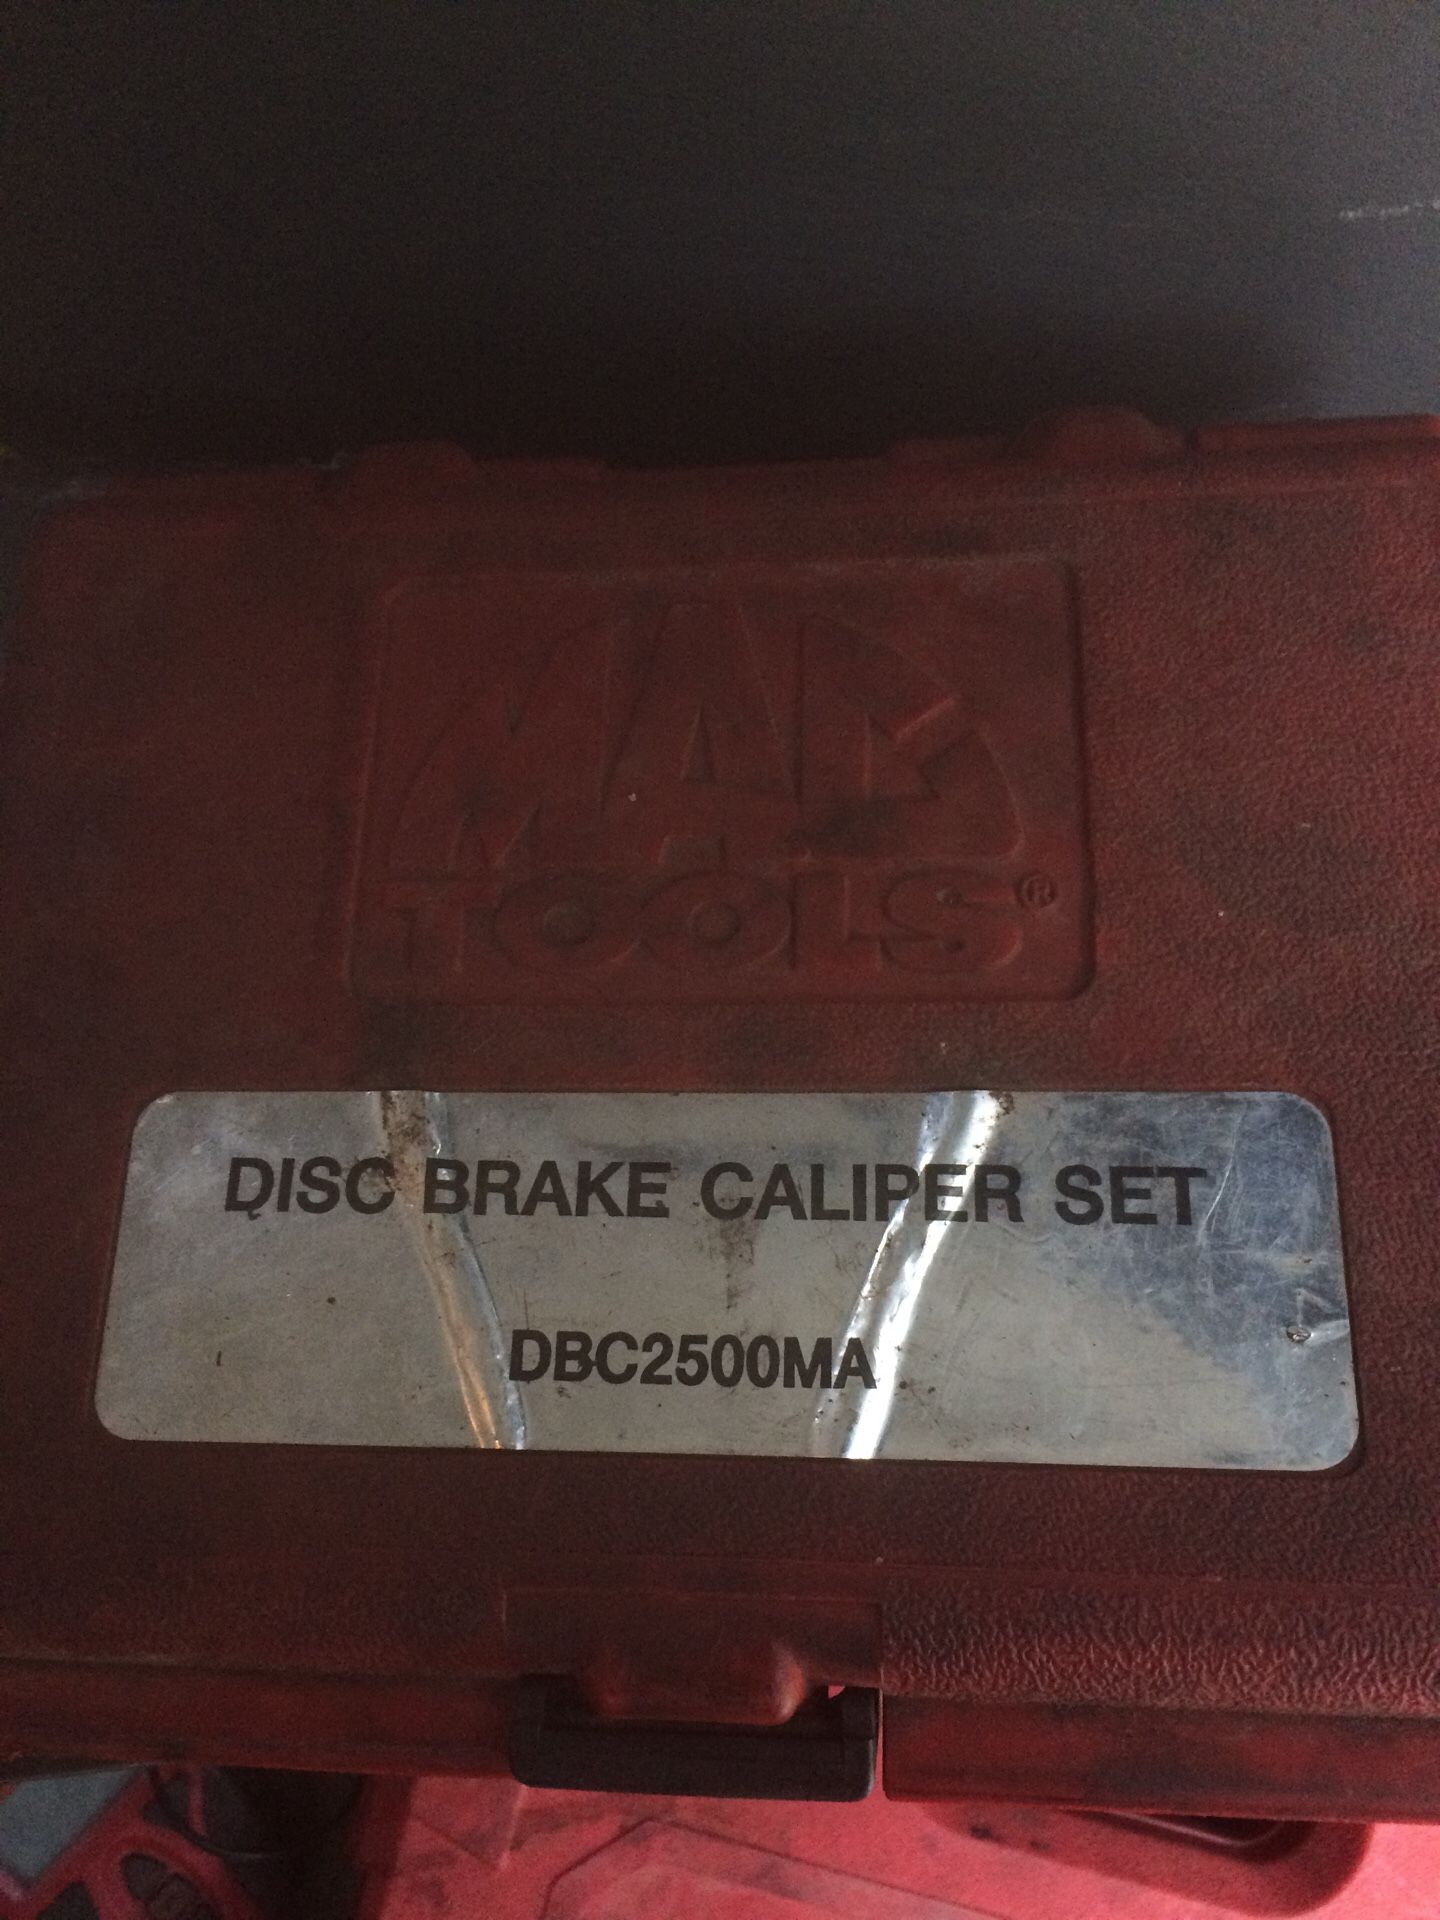 Mac tools disc brake caliper kit